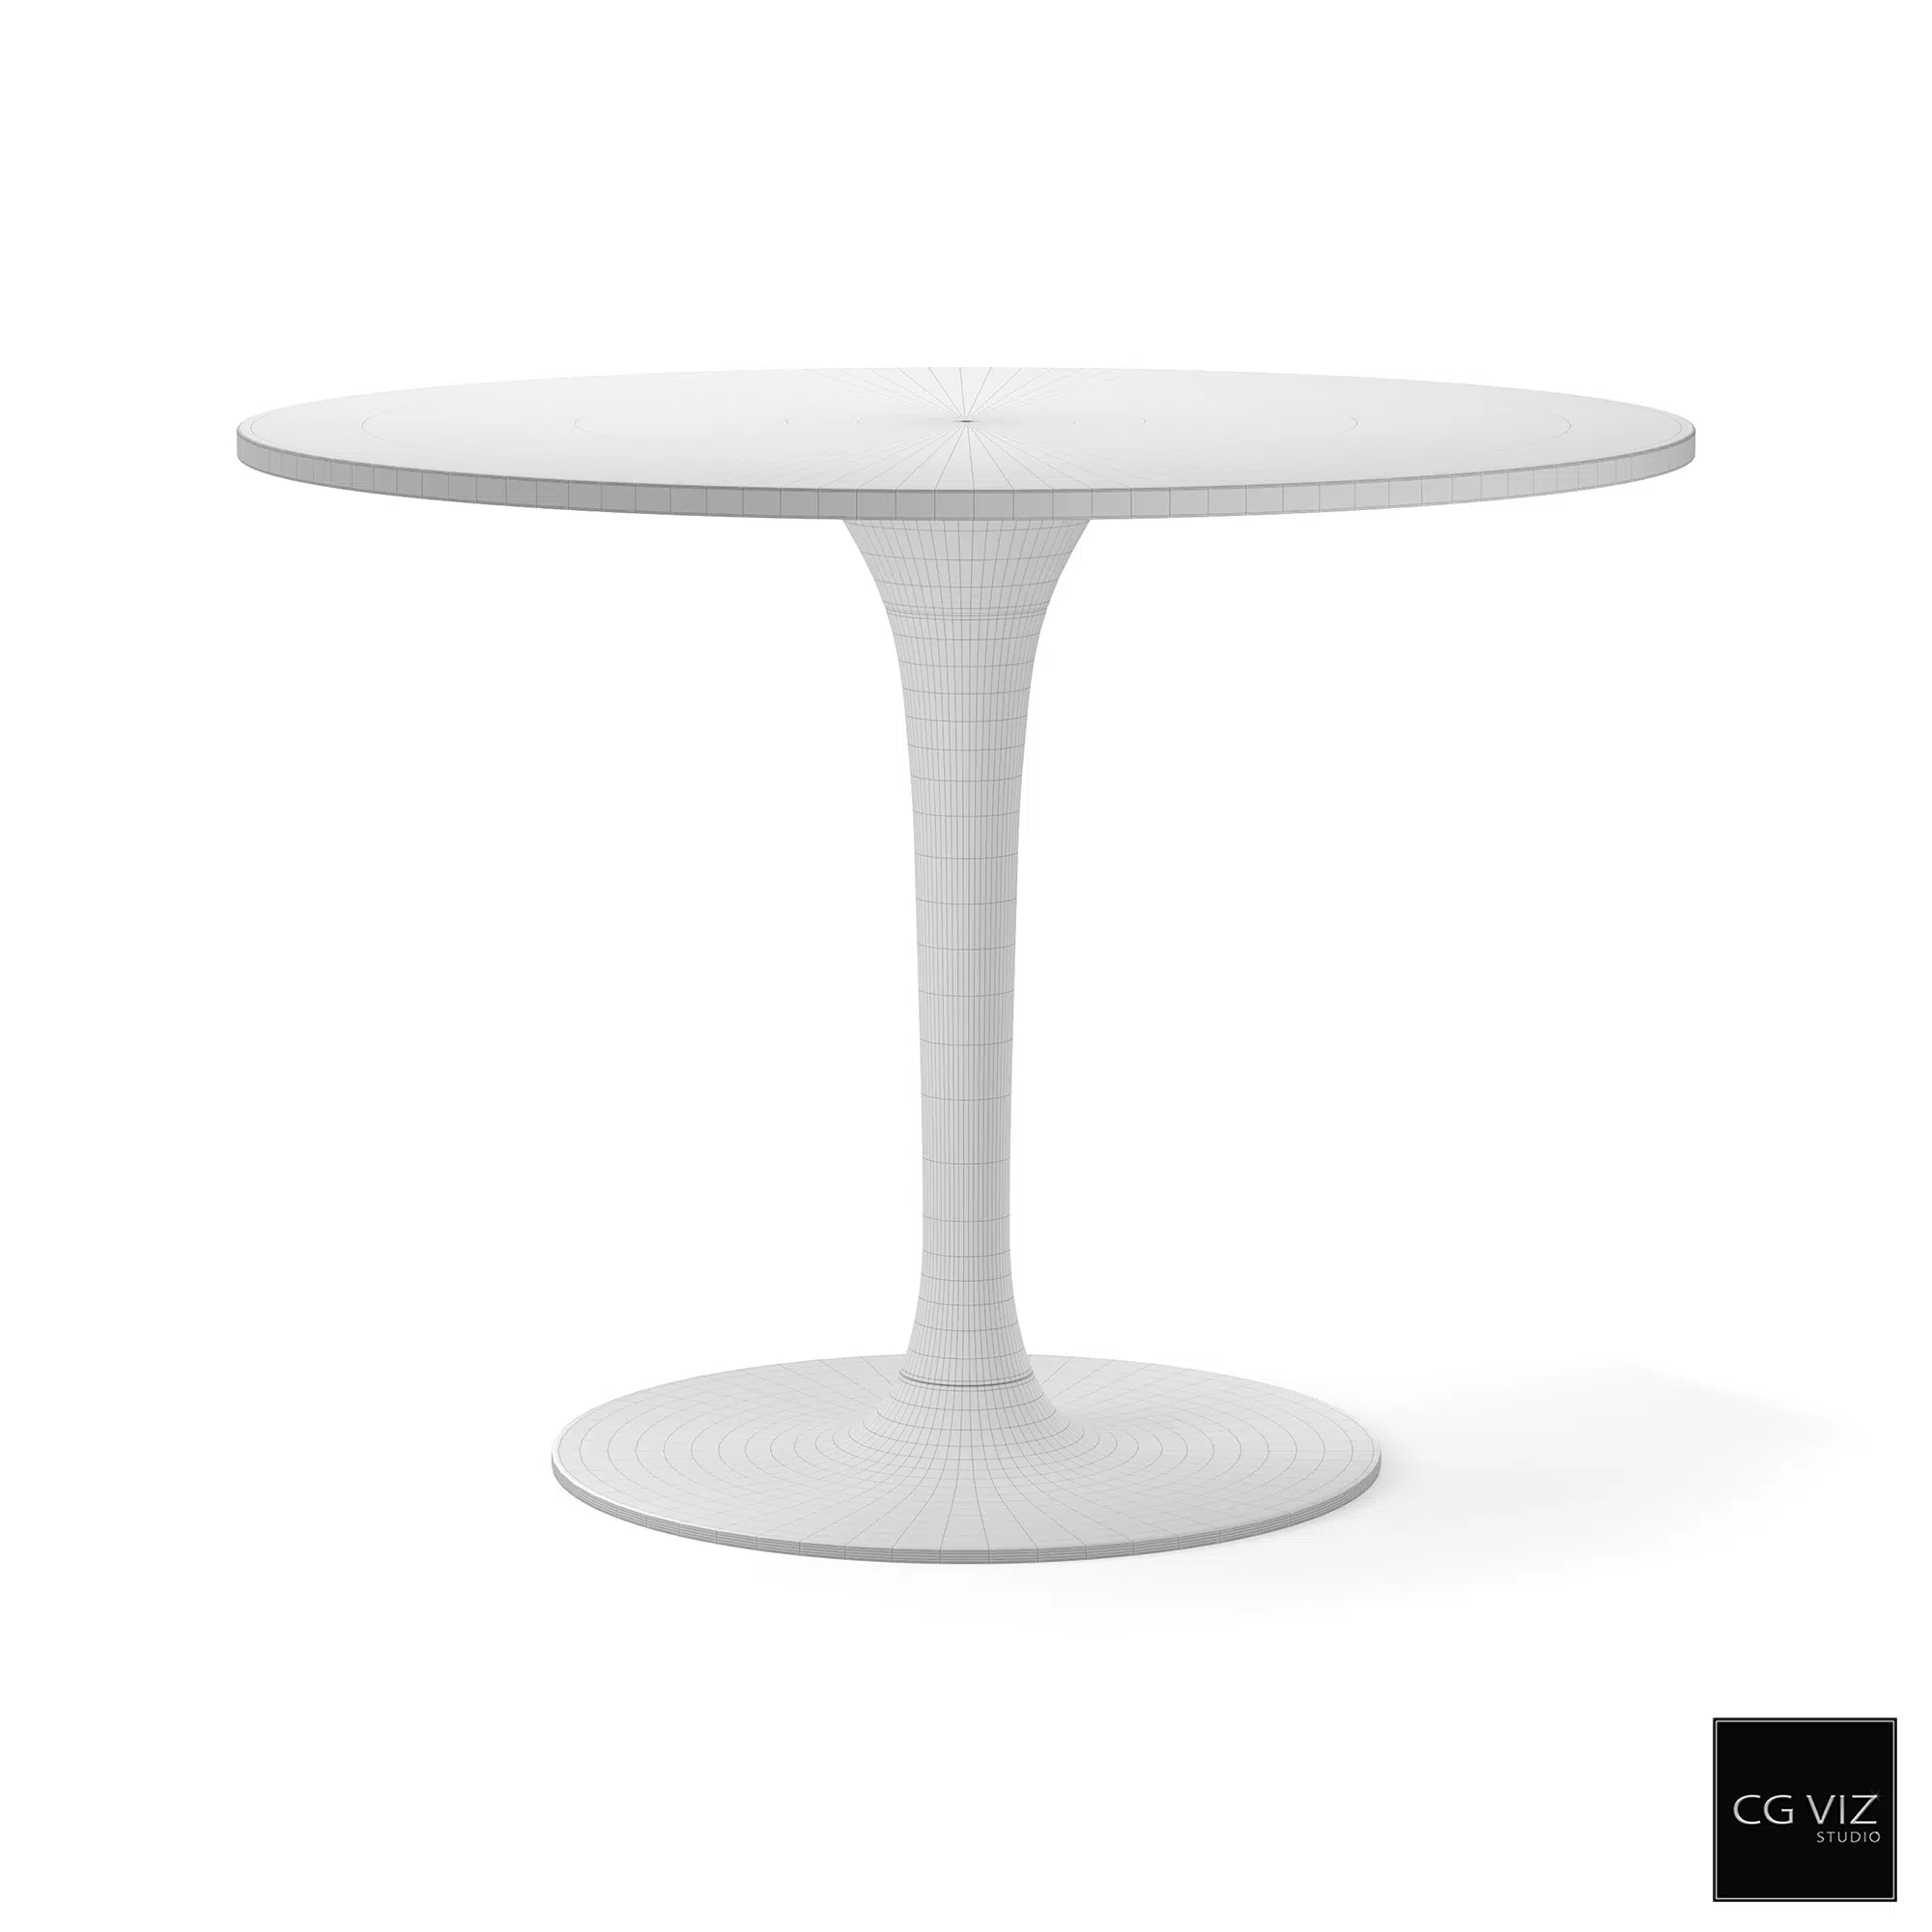 Wireframe Preview of IKEA Docksta Table 3D Model by CG Viz Studio